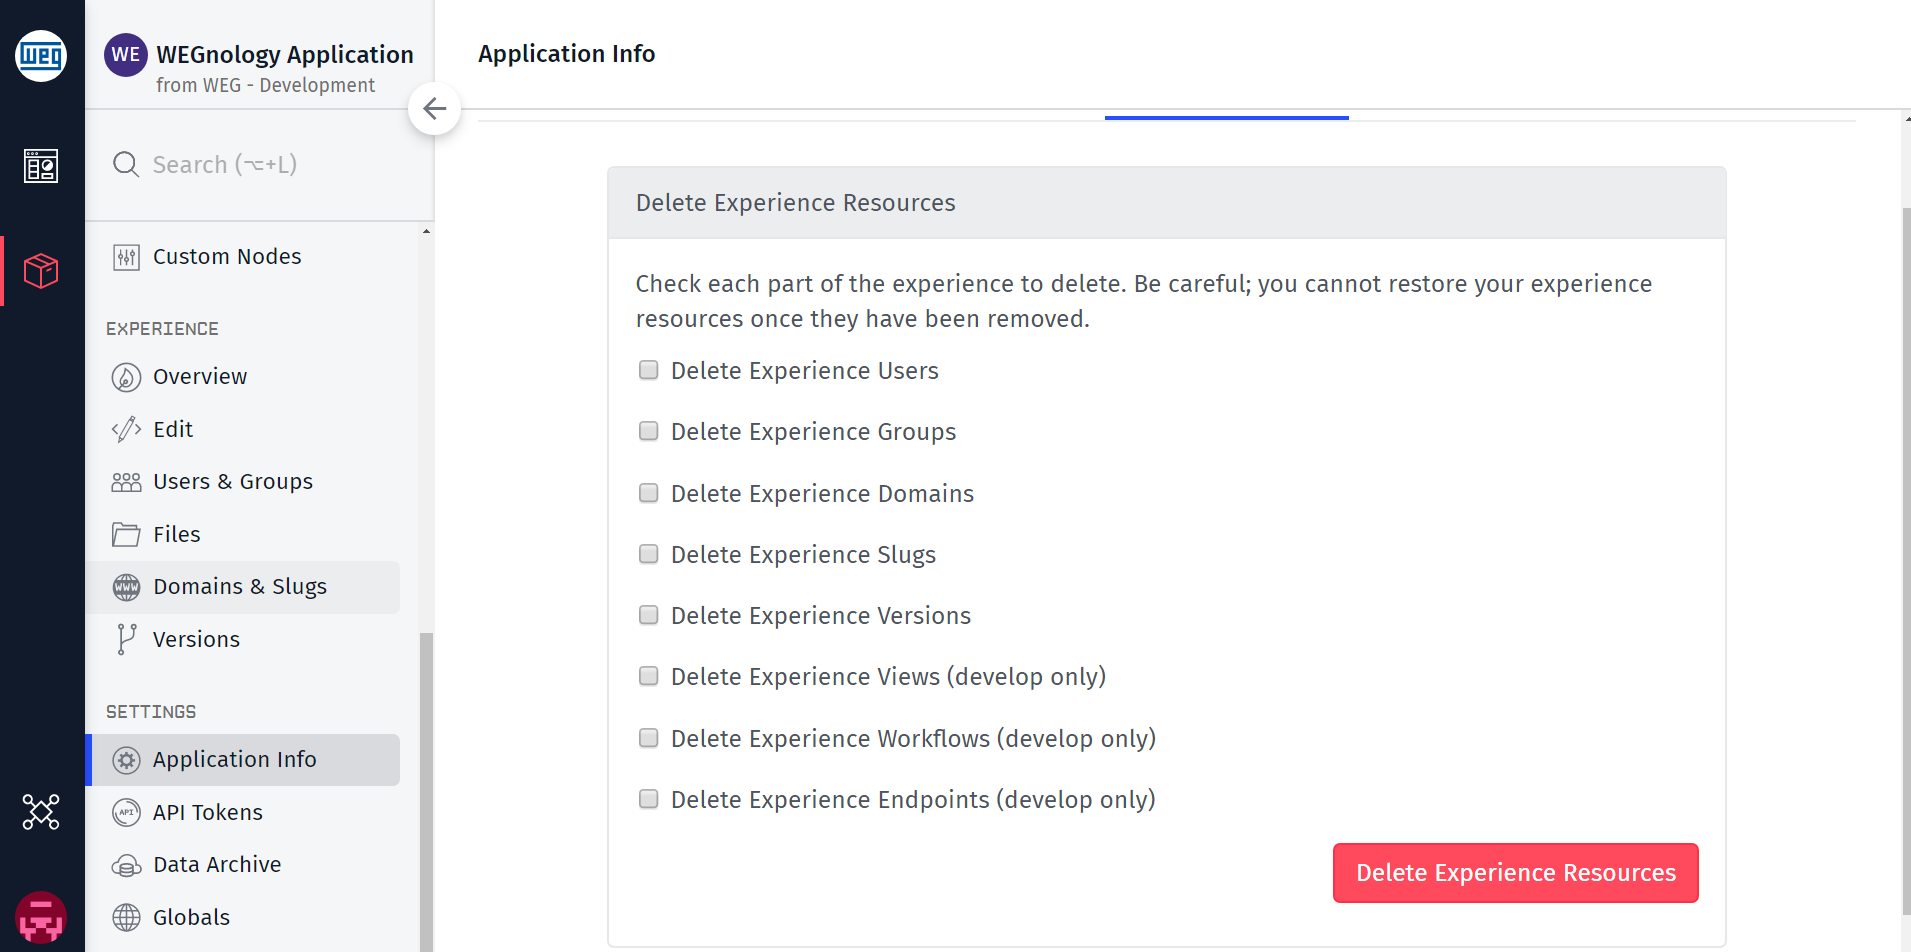 Bulk Delete Experience Versions